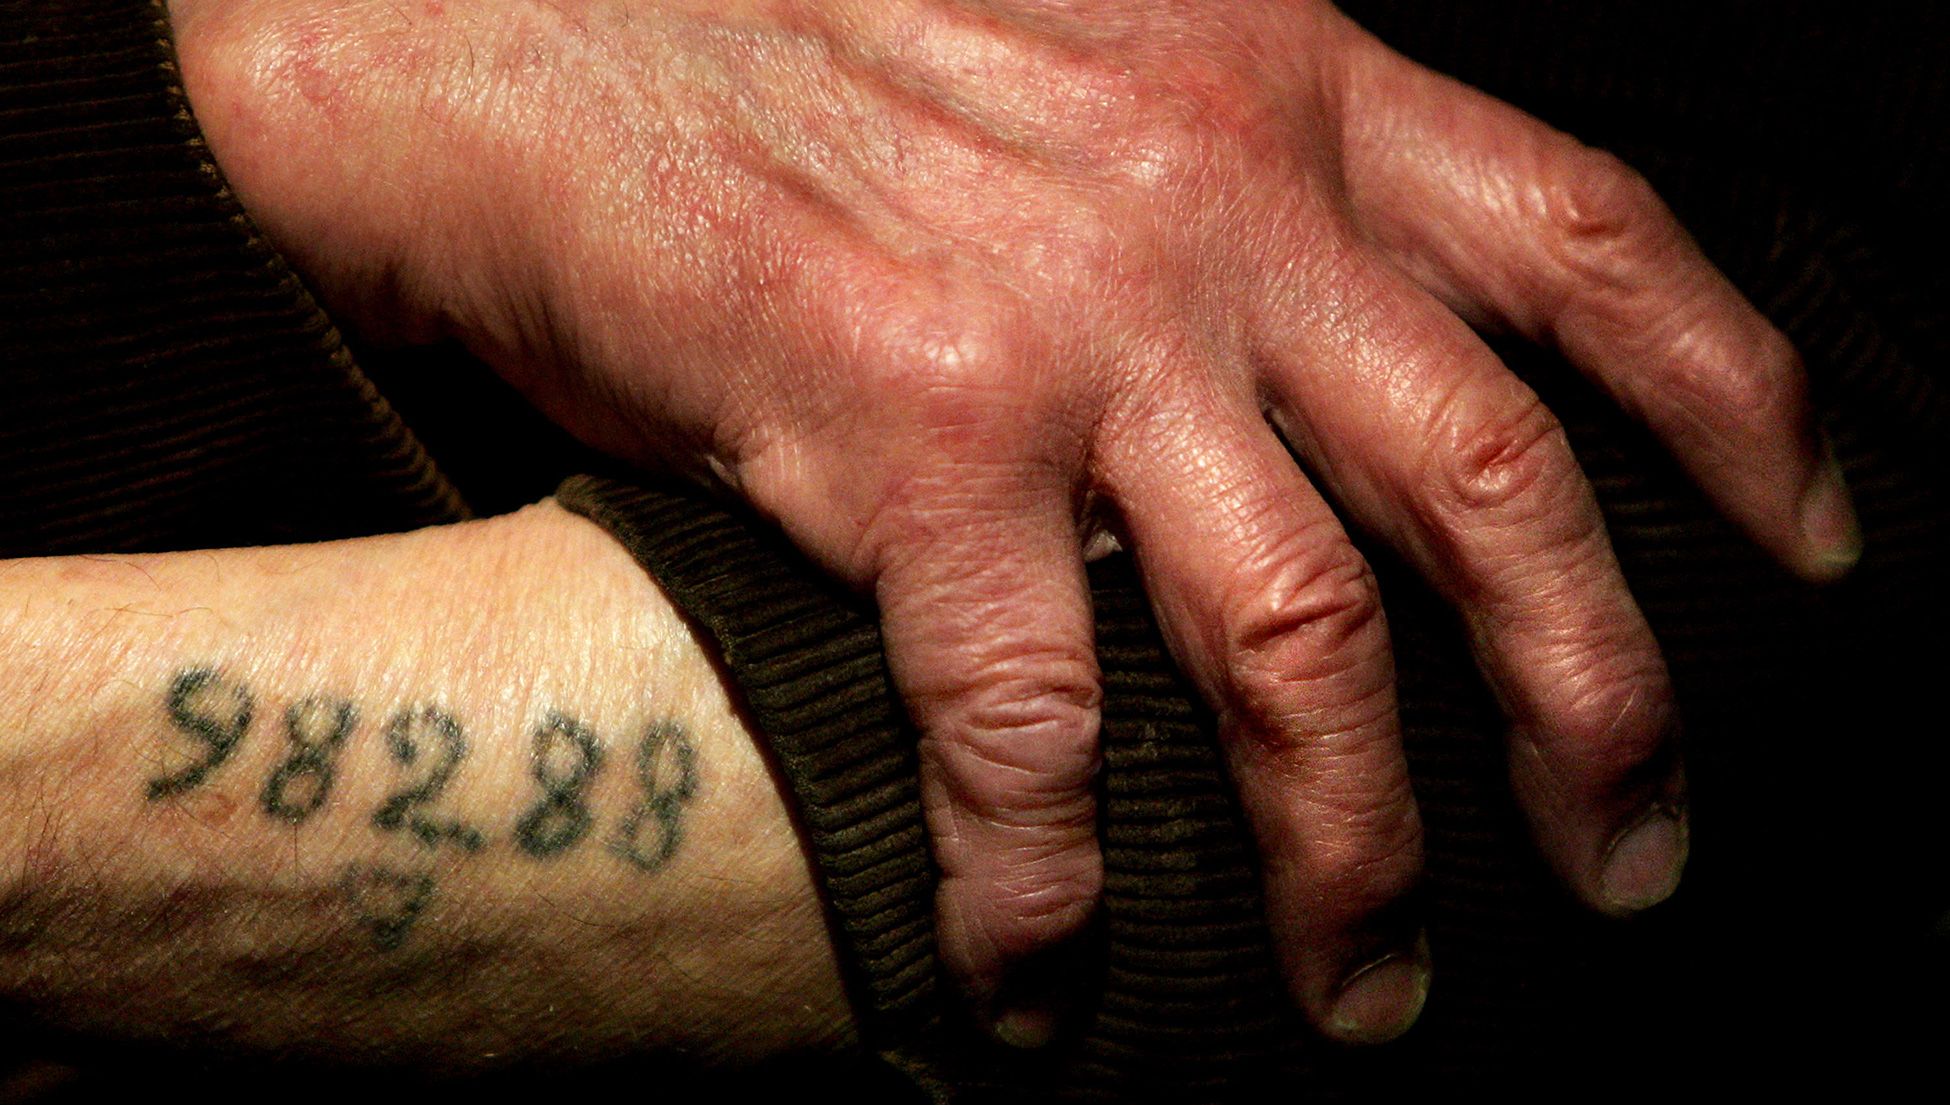 tattoos are mercy 🤍 #tattoos #religion #healing #mentalhealth #ptsd #tattoo  #tattooart #politics | Instagram